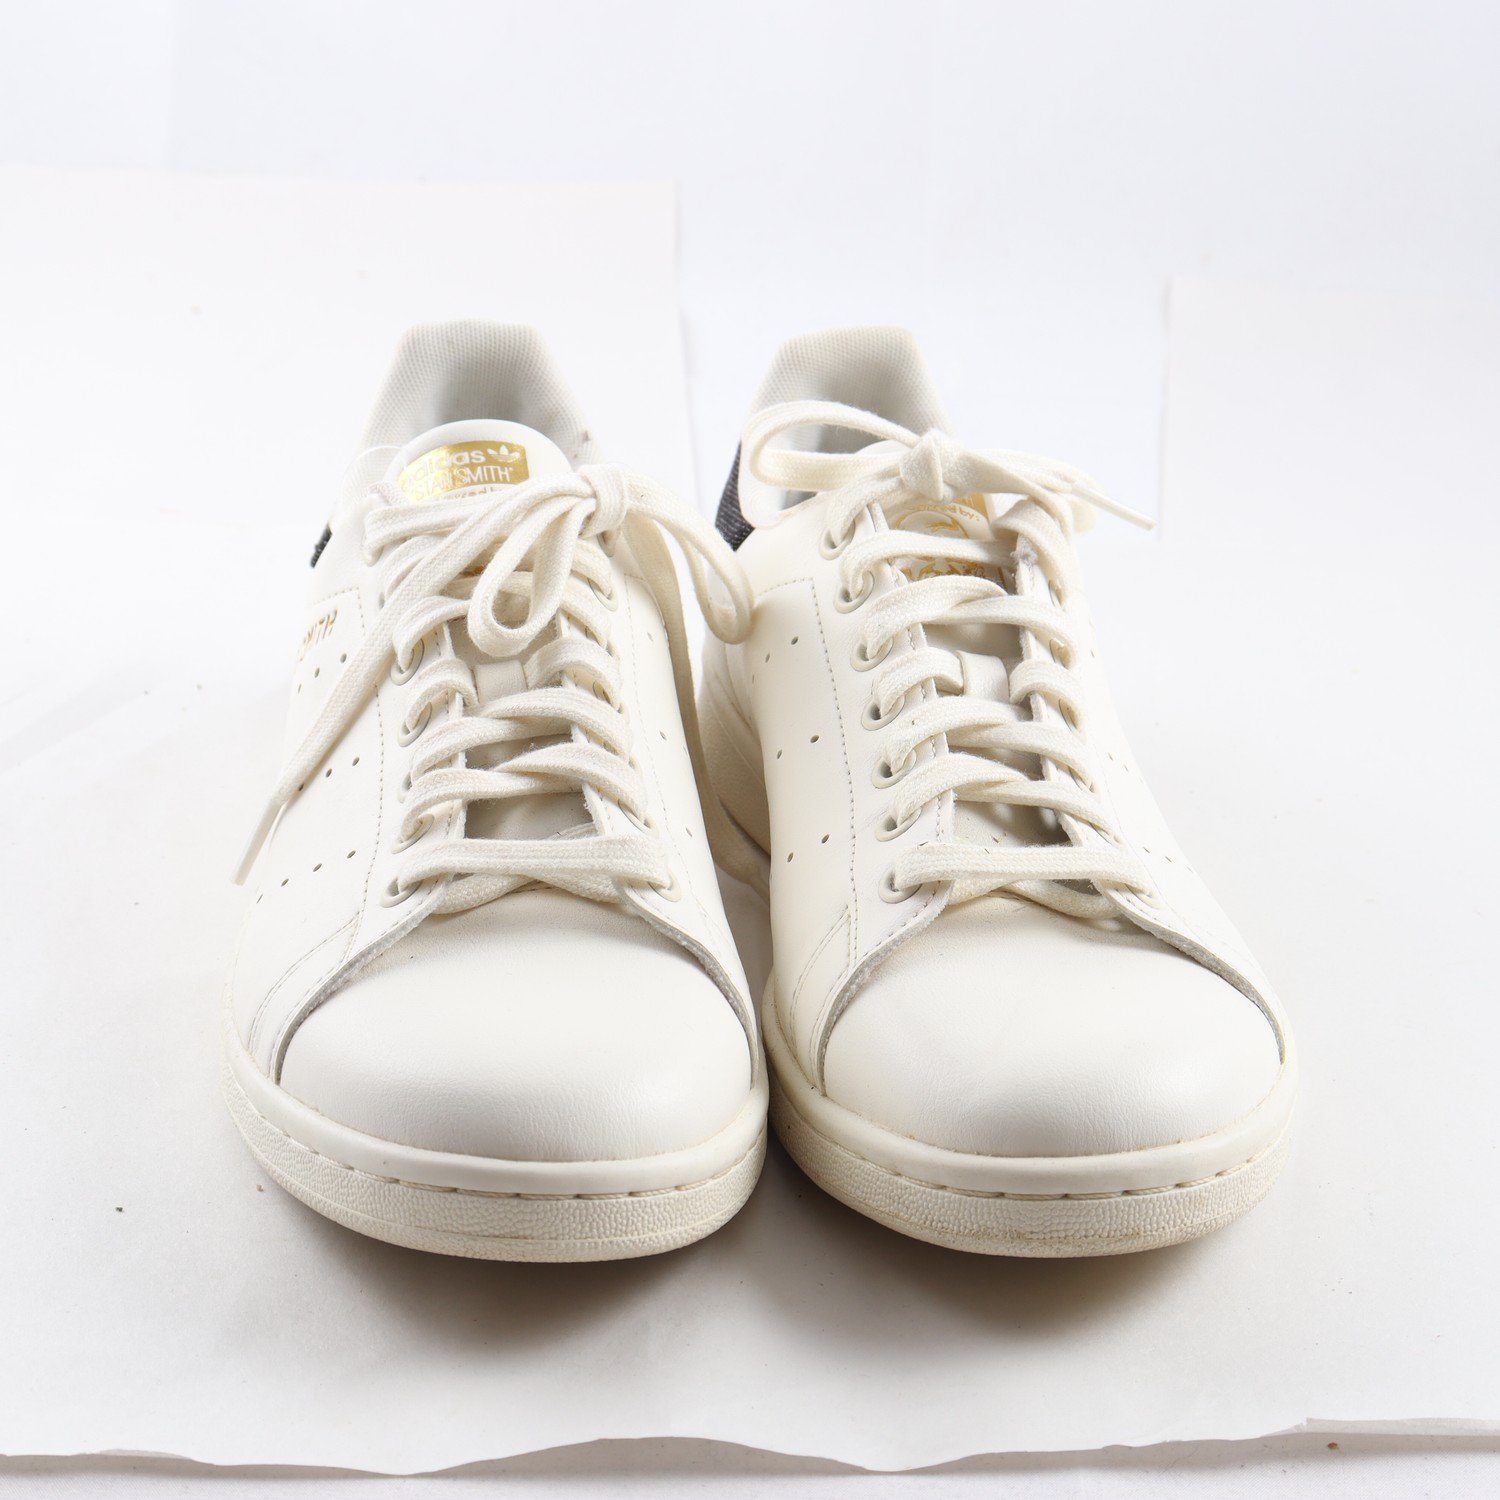 Sneakers, Adidas Stan Smith, vit, stl. 9 (43)